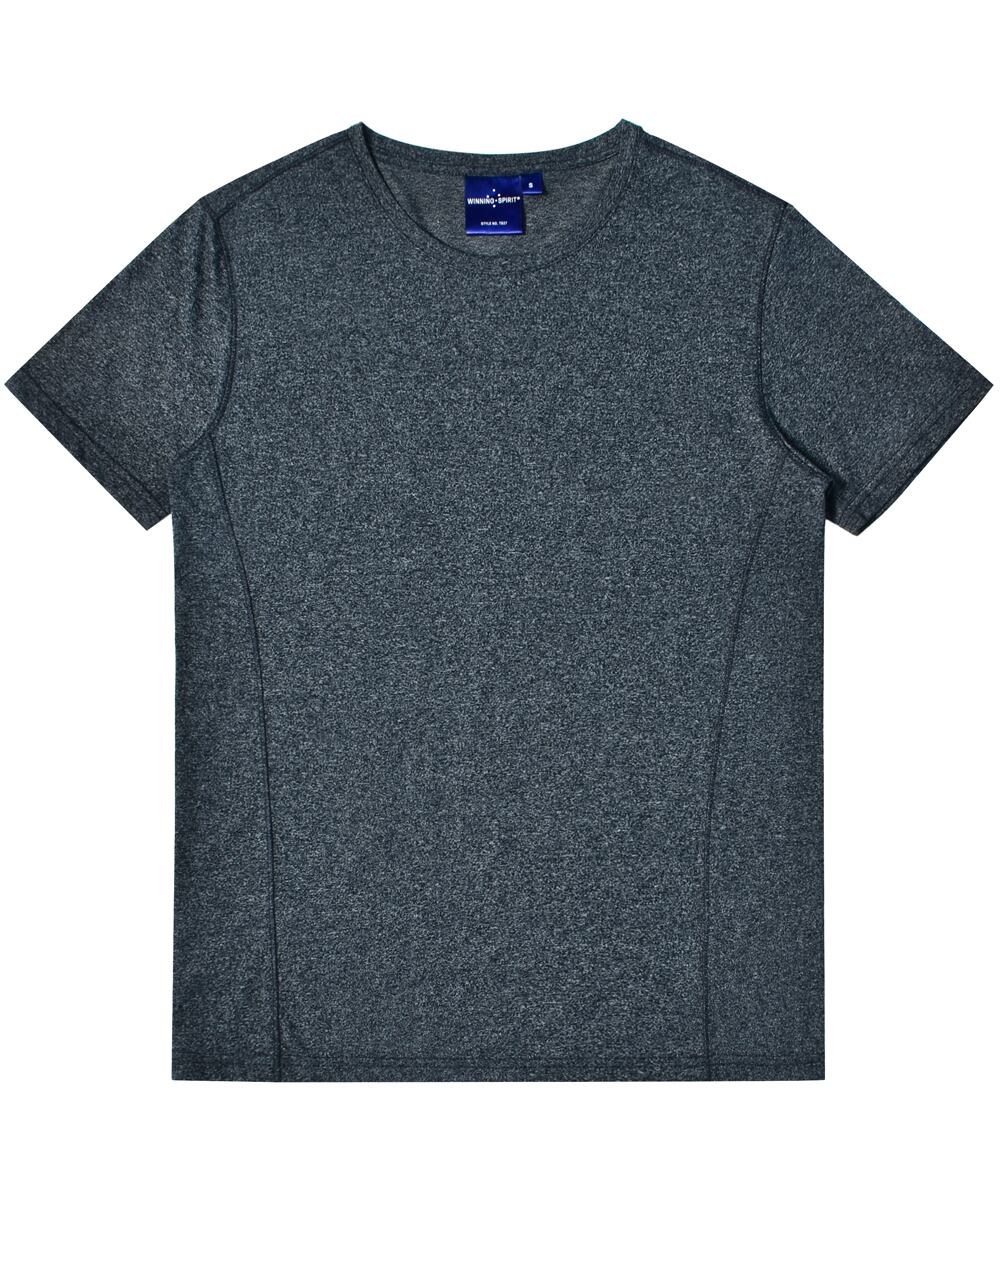 Custom (Grey) Mens Heather T-Shirts Online in Perth Australia